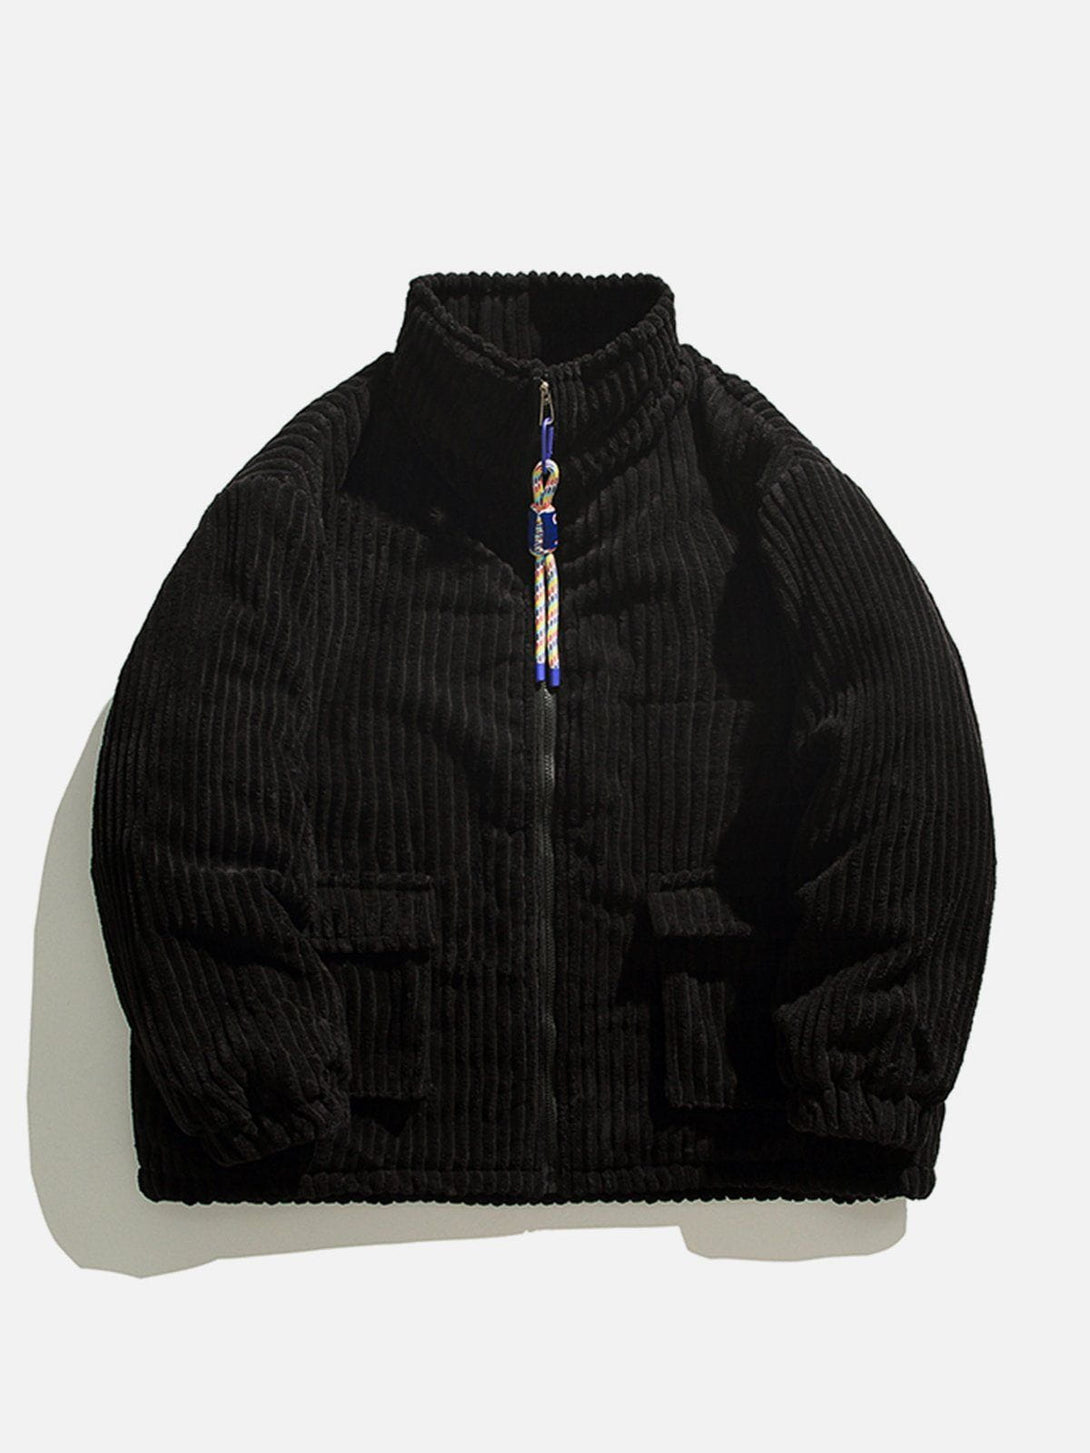 Majesda® - Solid Corduroy Oversized Pocket Winter Coat outfit ideas streetwear fashion